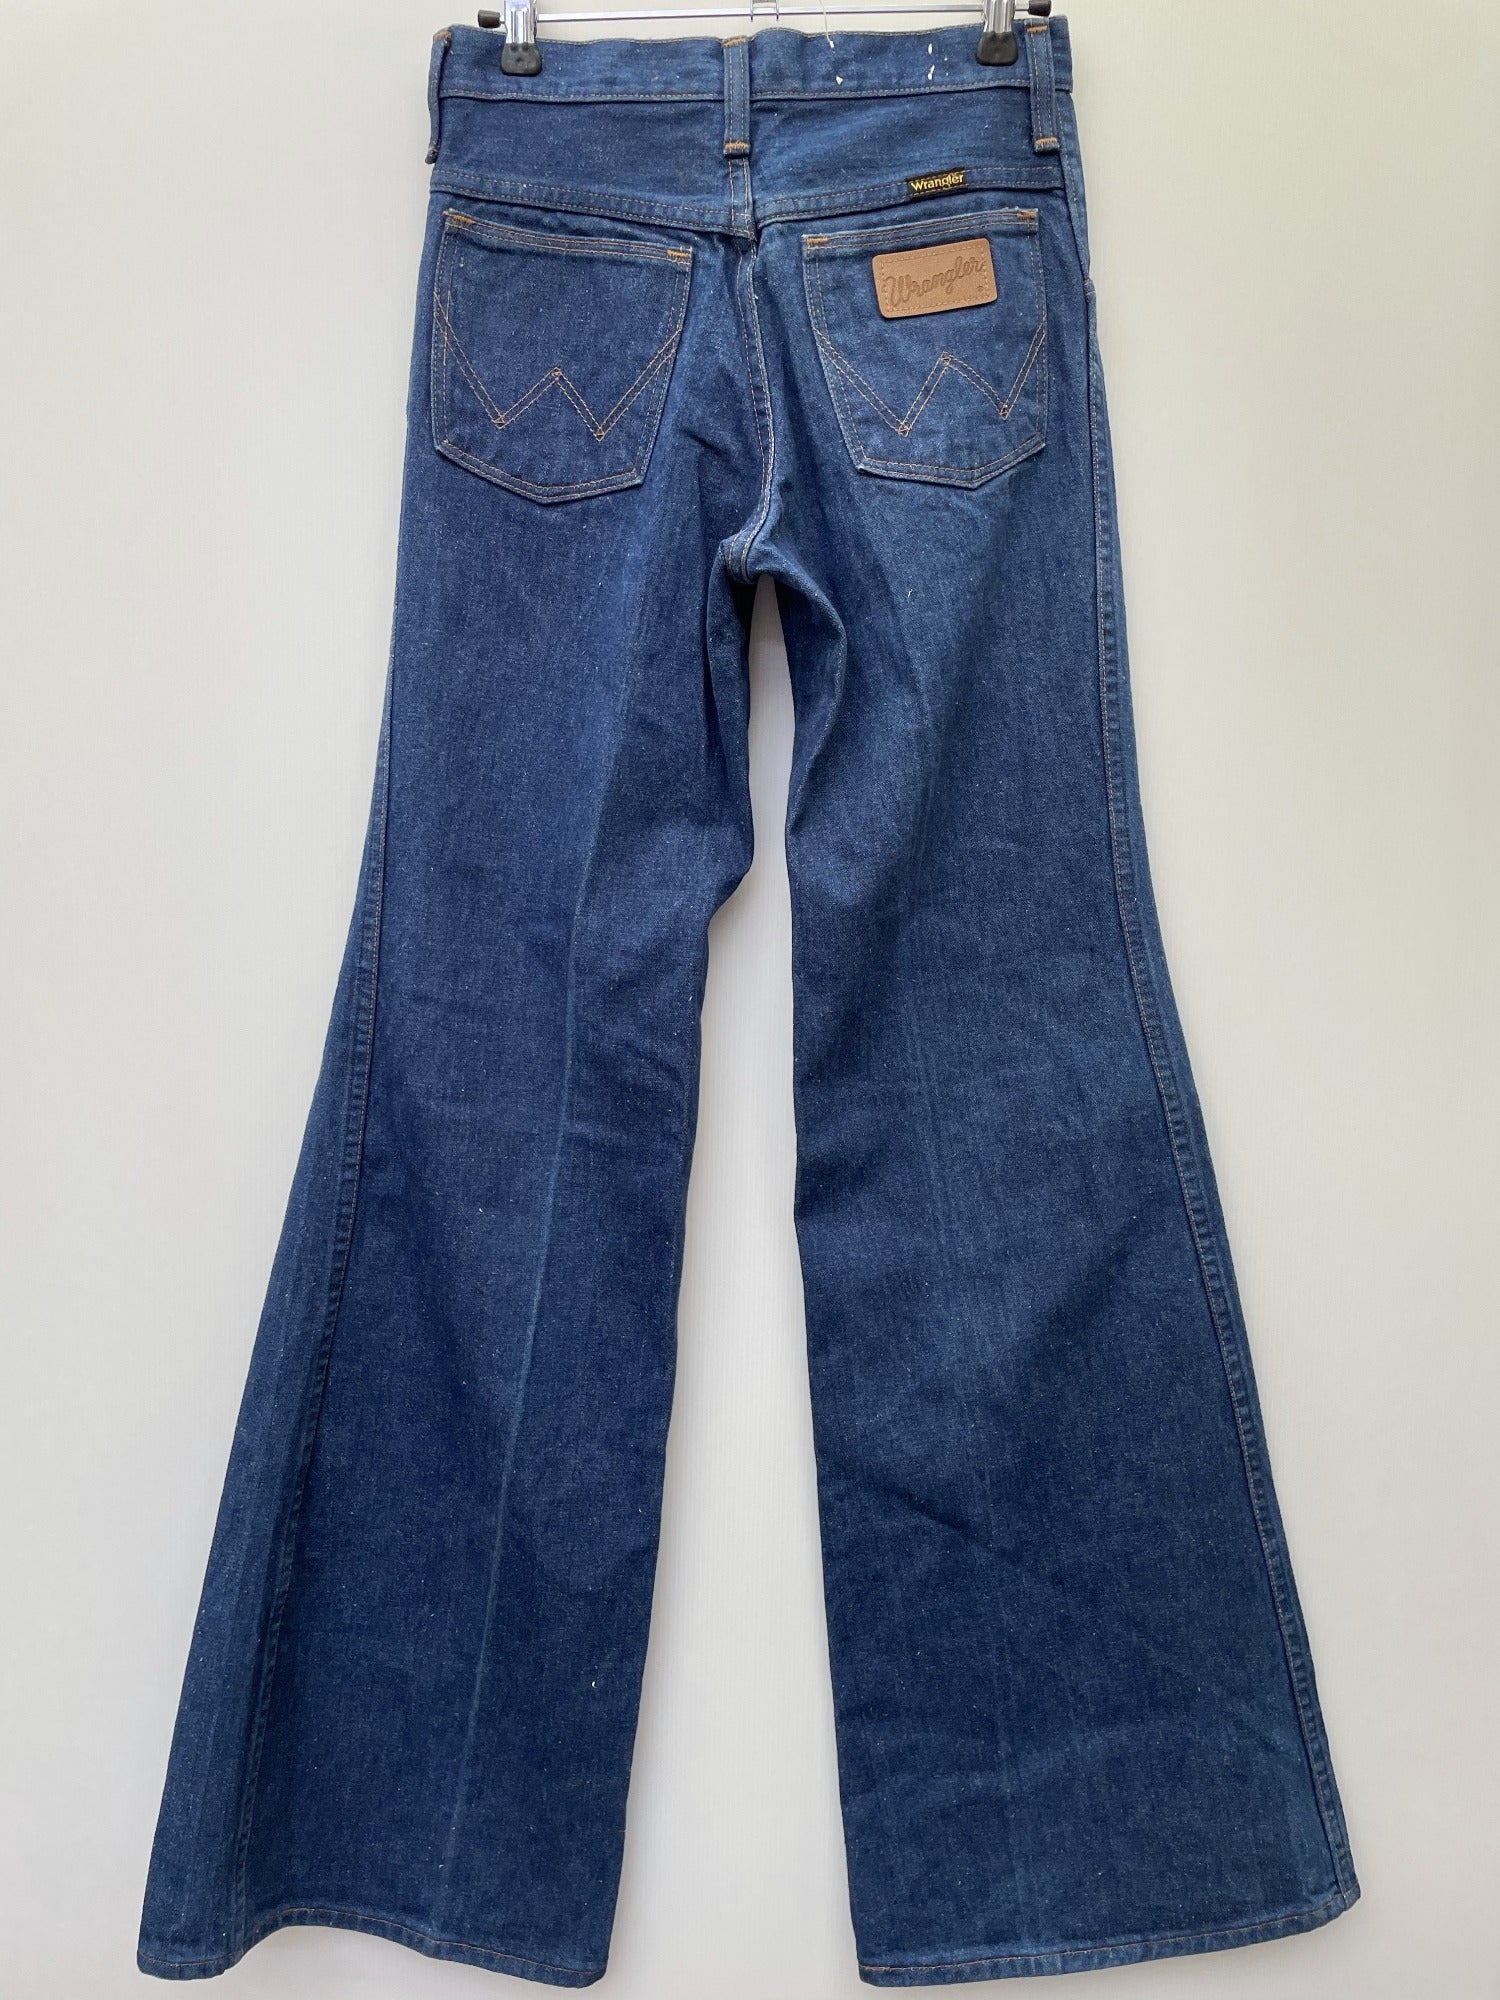 wrangler  vintage  Urban Village Vintage  urban village  stitch detailing  retro  MOD  mens  Light Blue  jeans  jean  Jacket  indigo  flares  denim  brown stitch  blue  70s  70  34  26  1970s